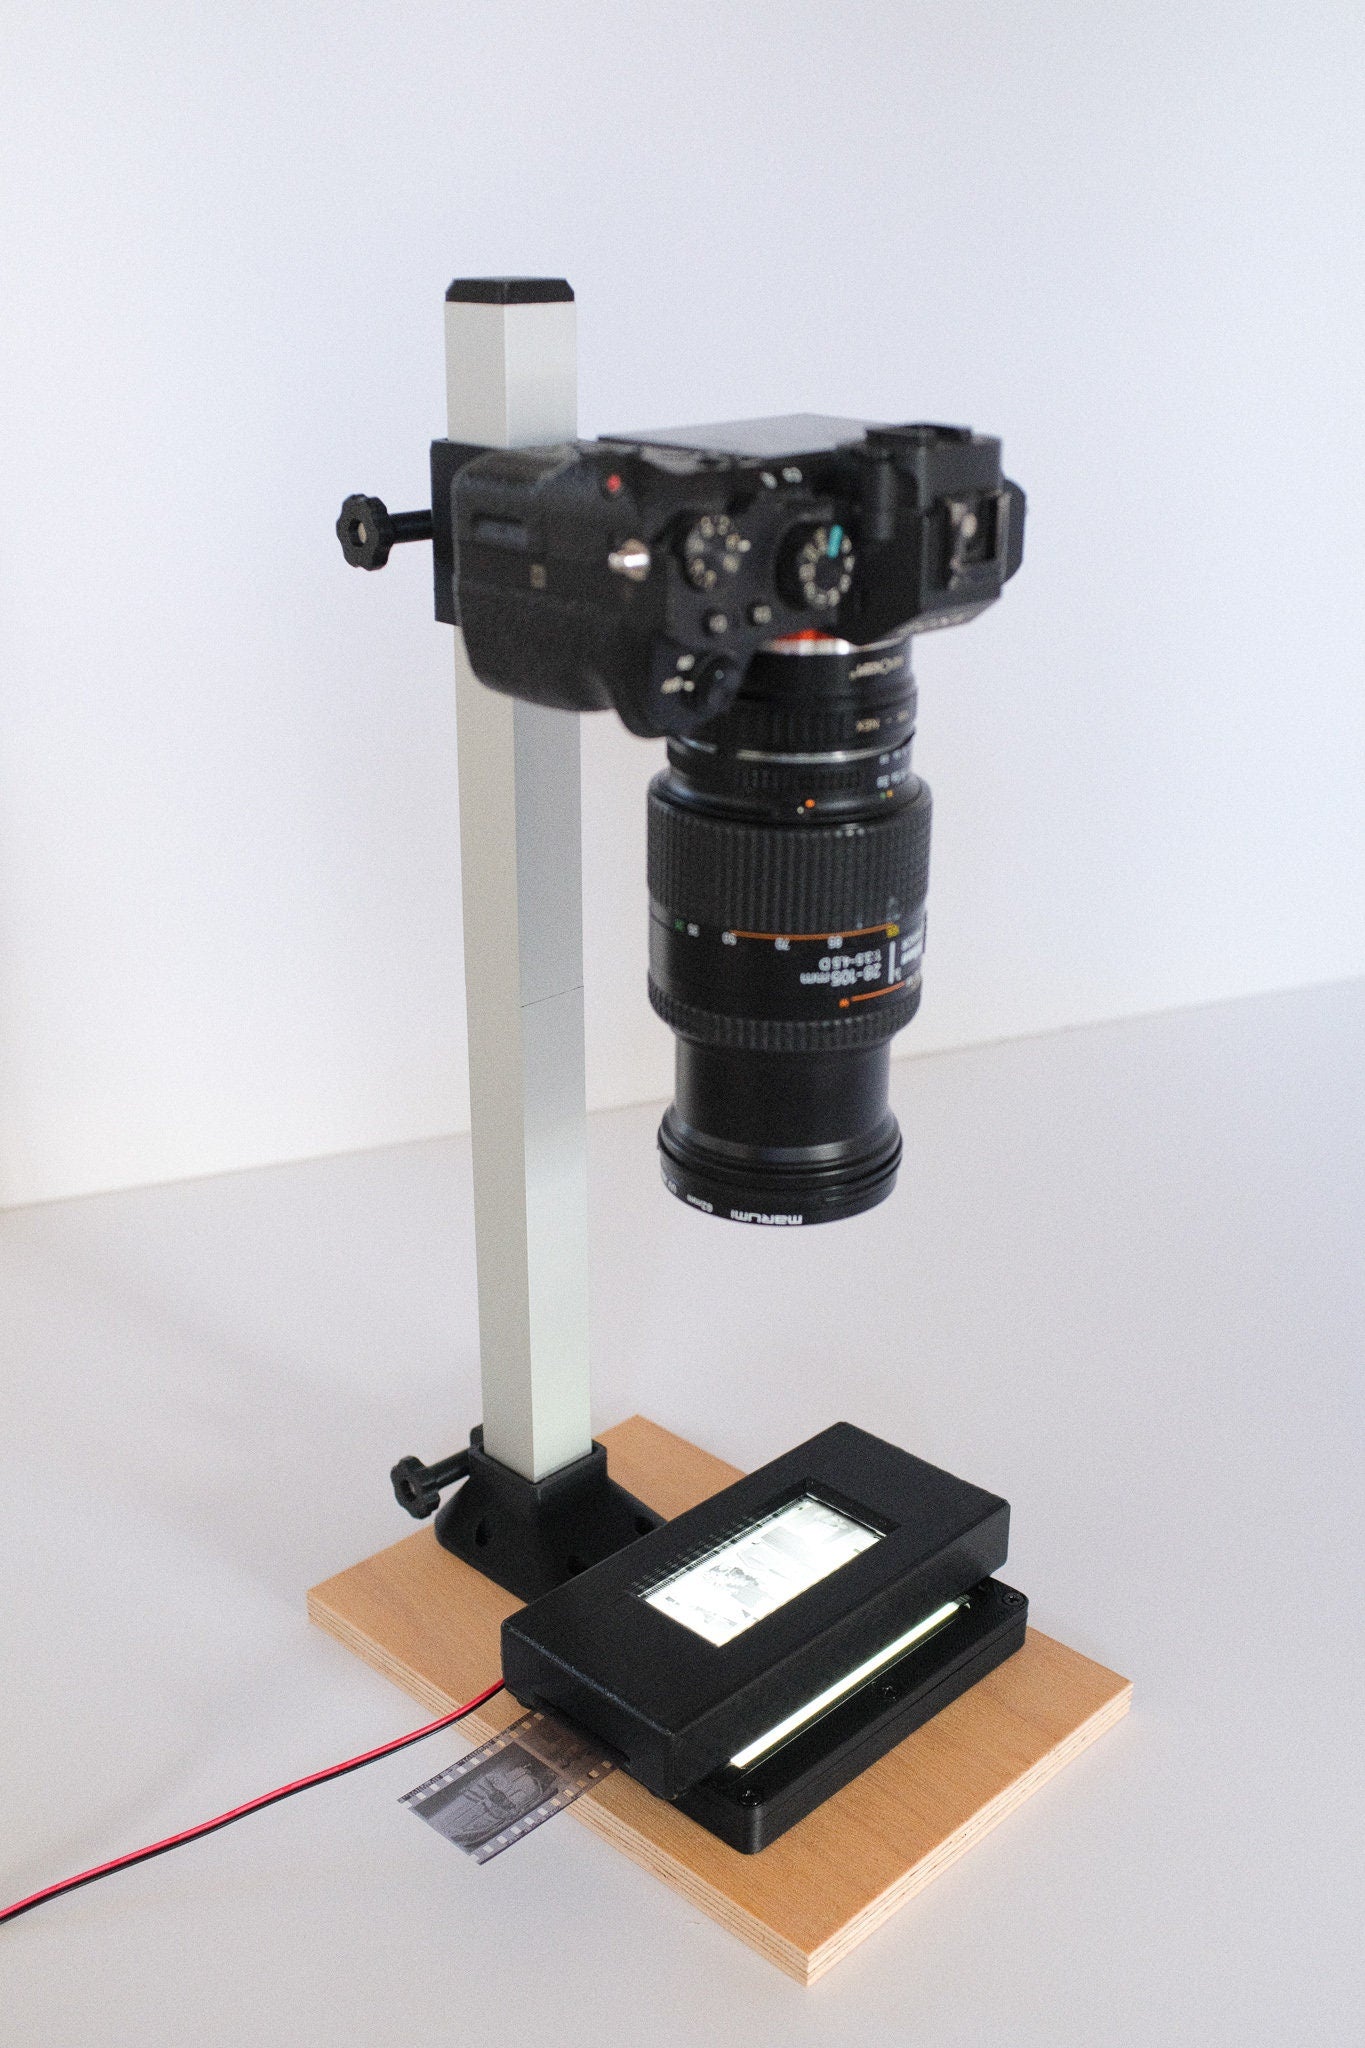 Complete 35mm DSLR Scanning Kit: Camera Copy Stand, 35mm Carrier, and LED Light Panel (+97 CRI)